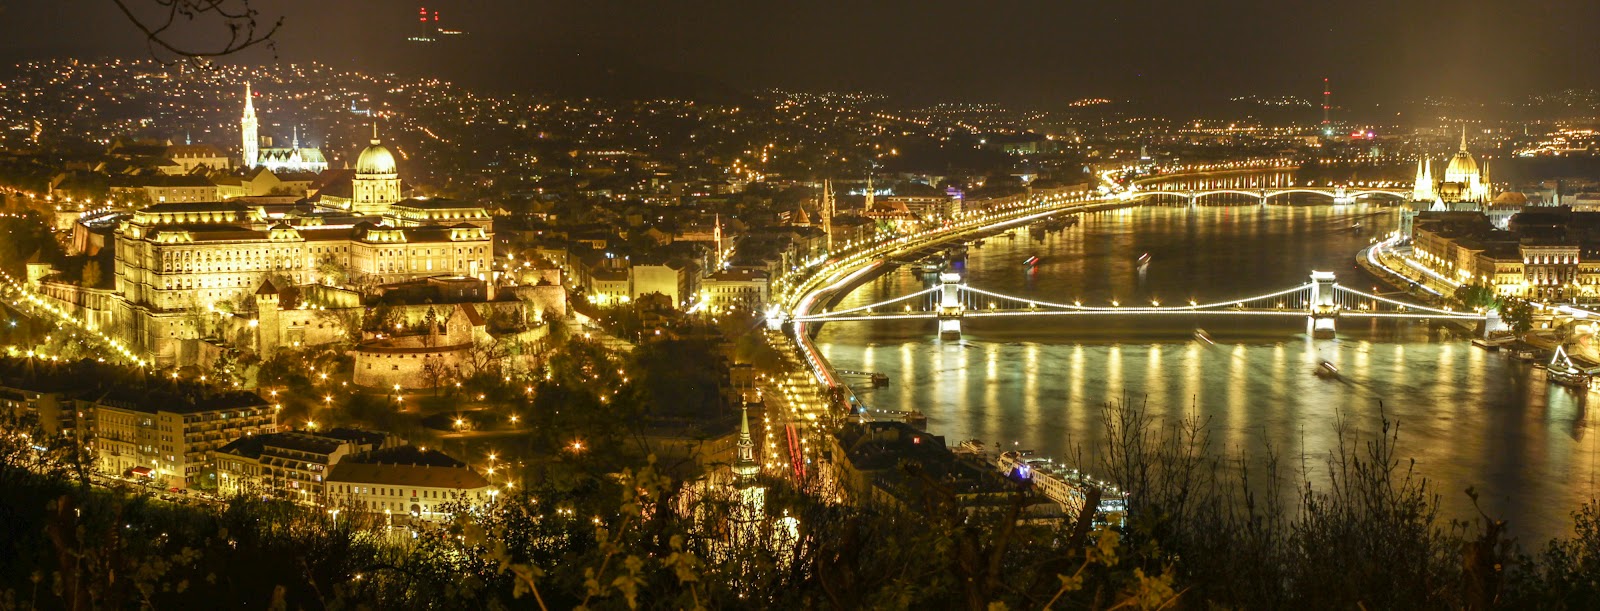 budapest by night 2012 2